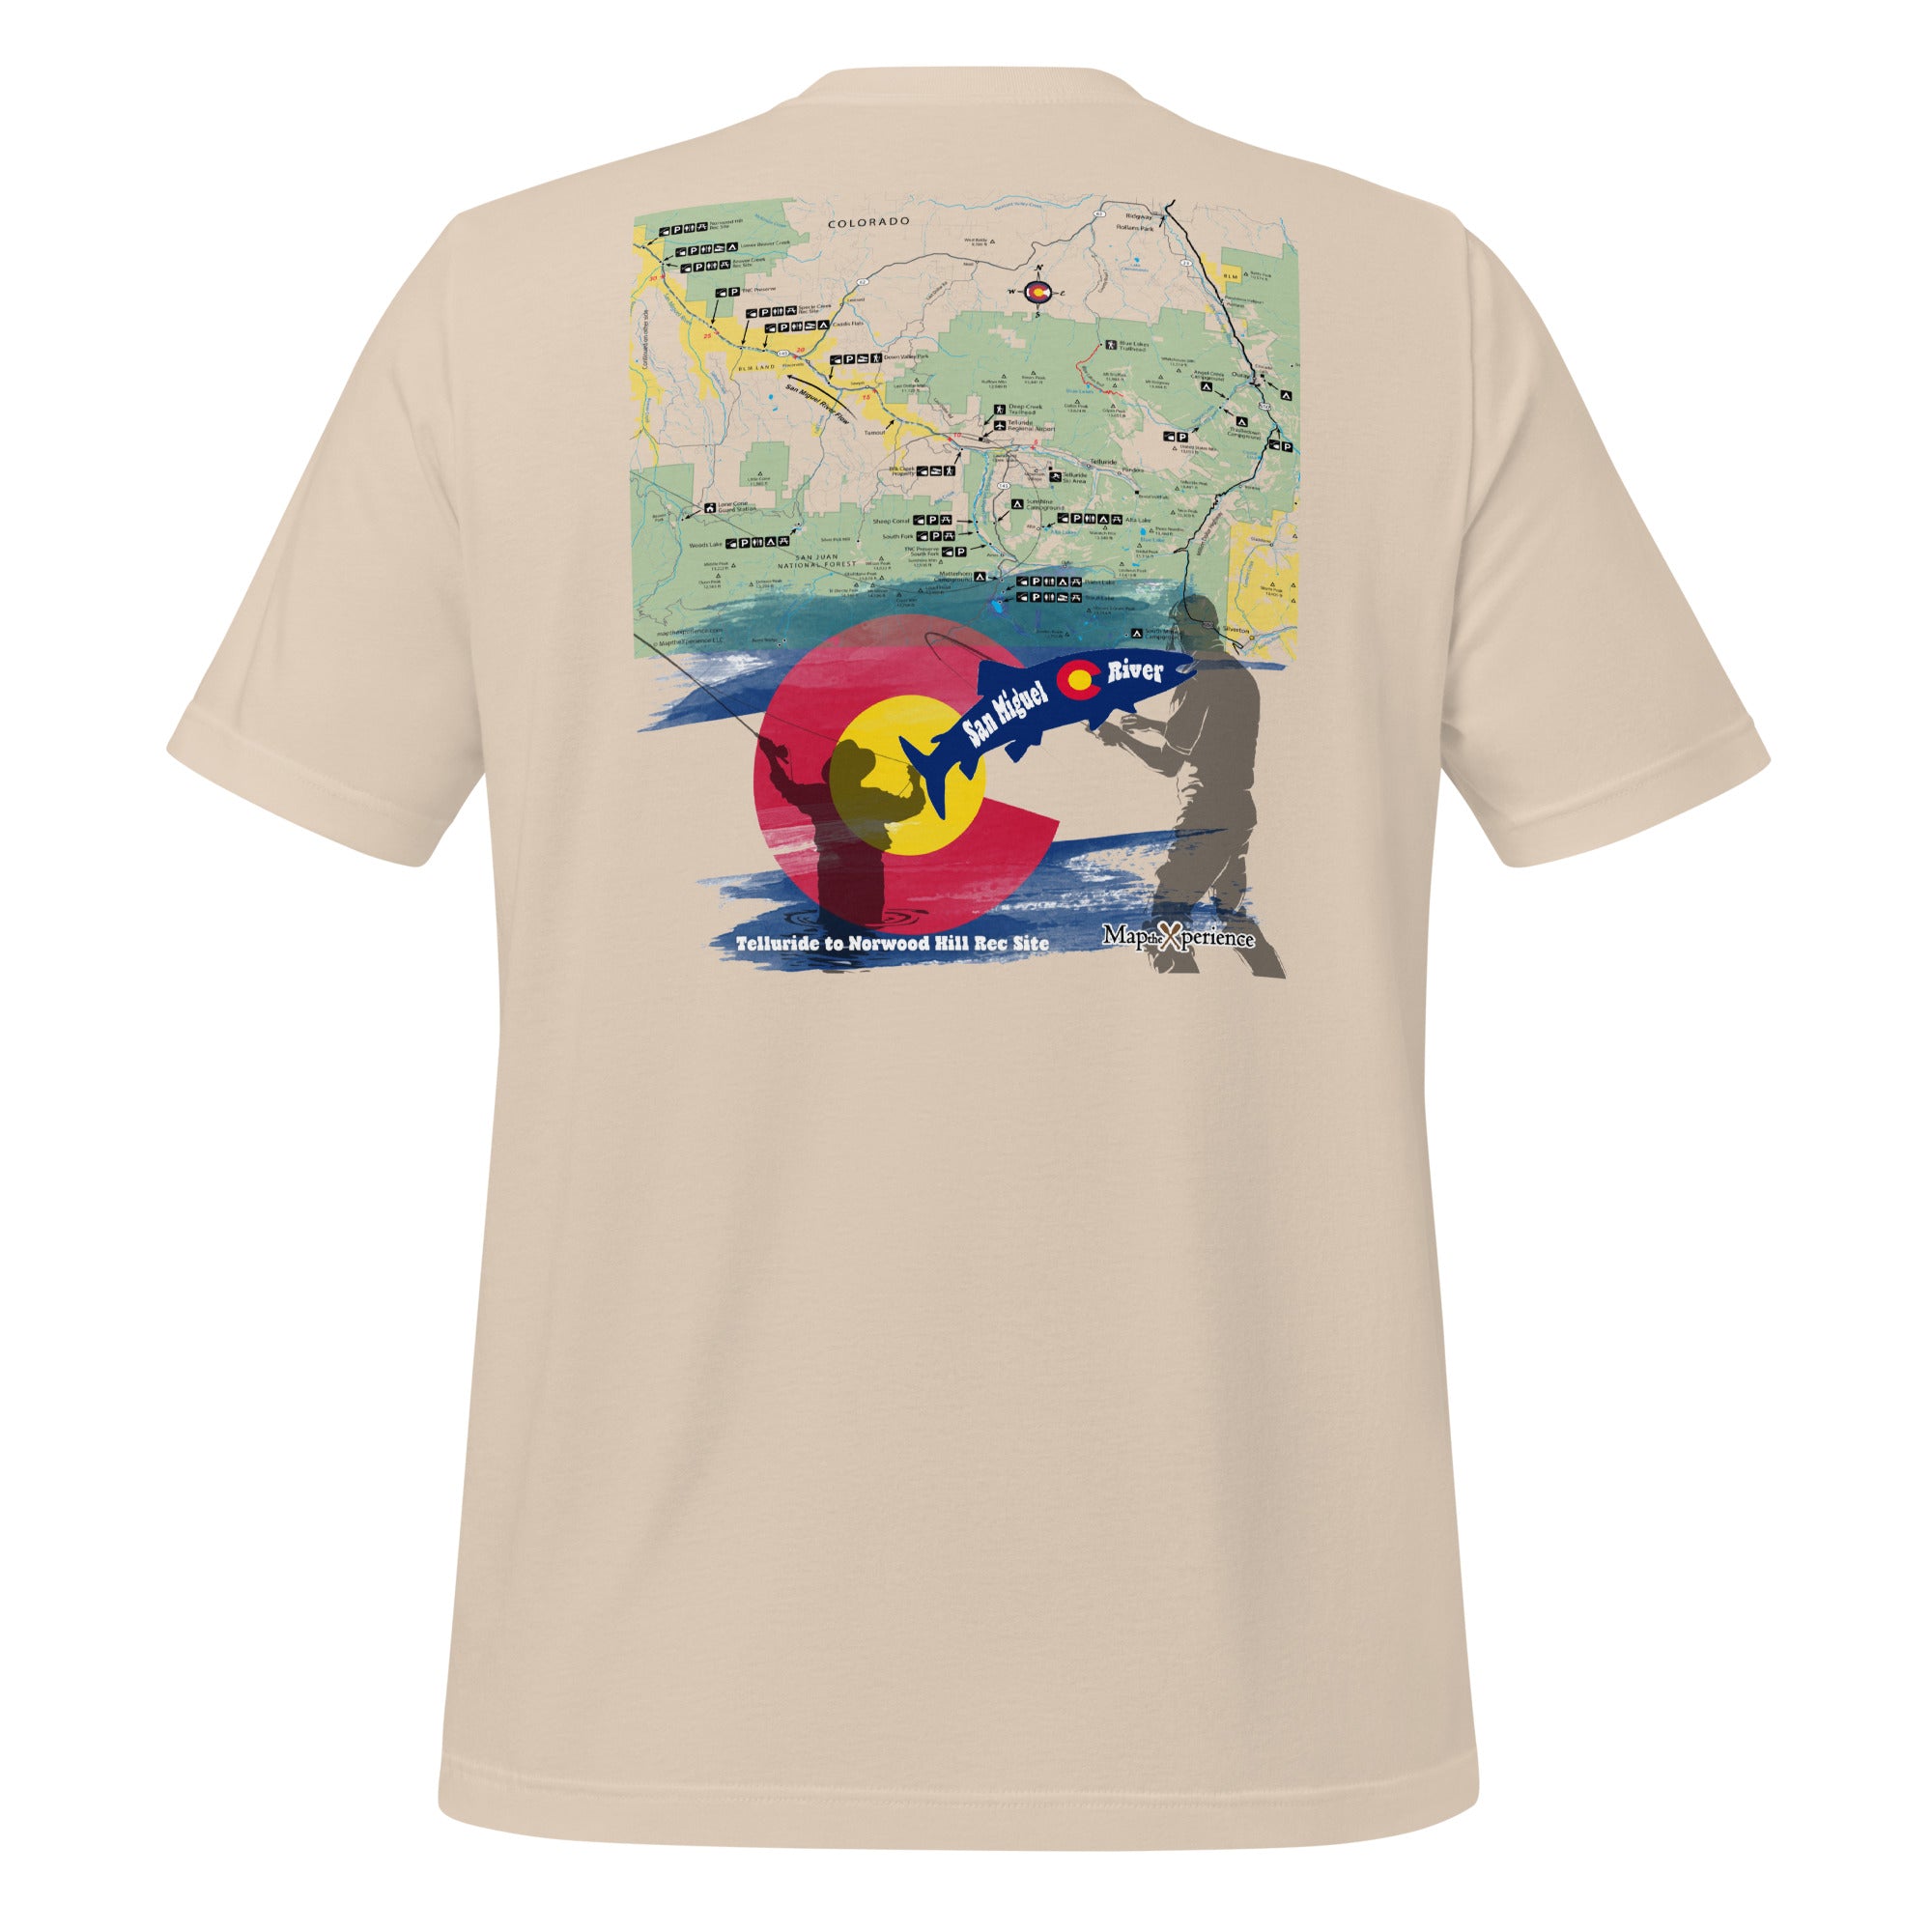 San Miguel River Upper, Colorado Performance t-shirt